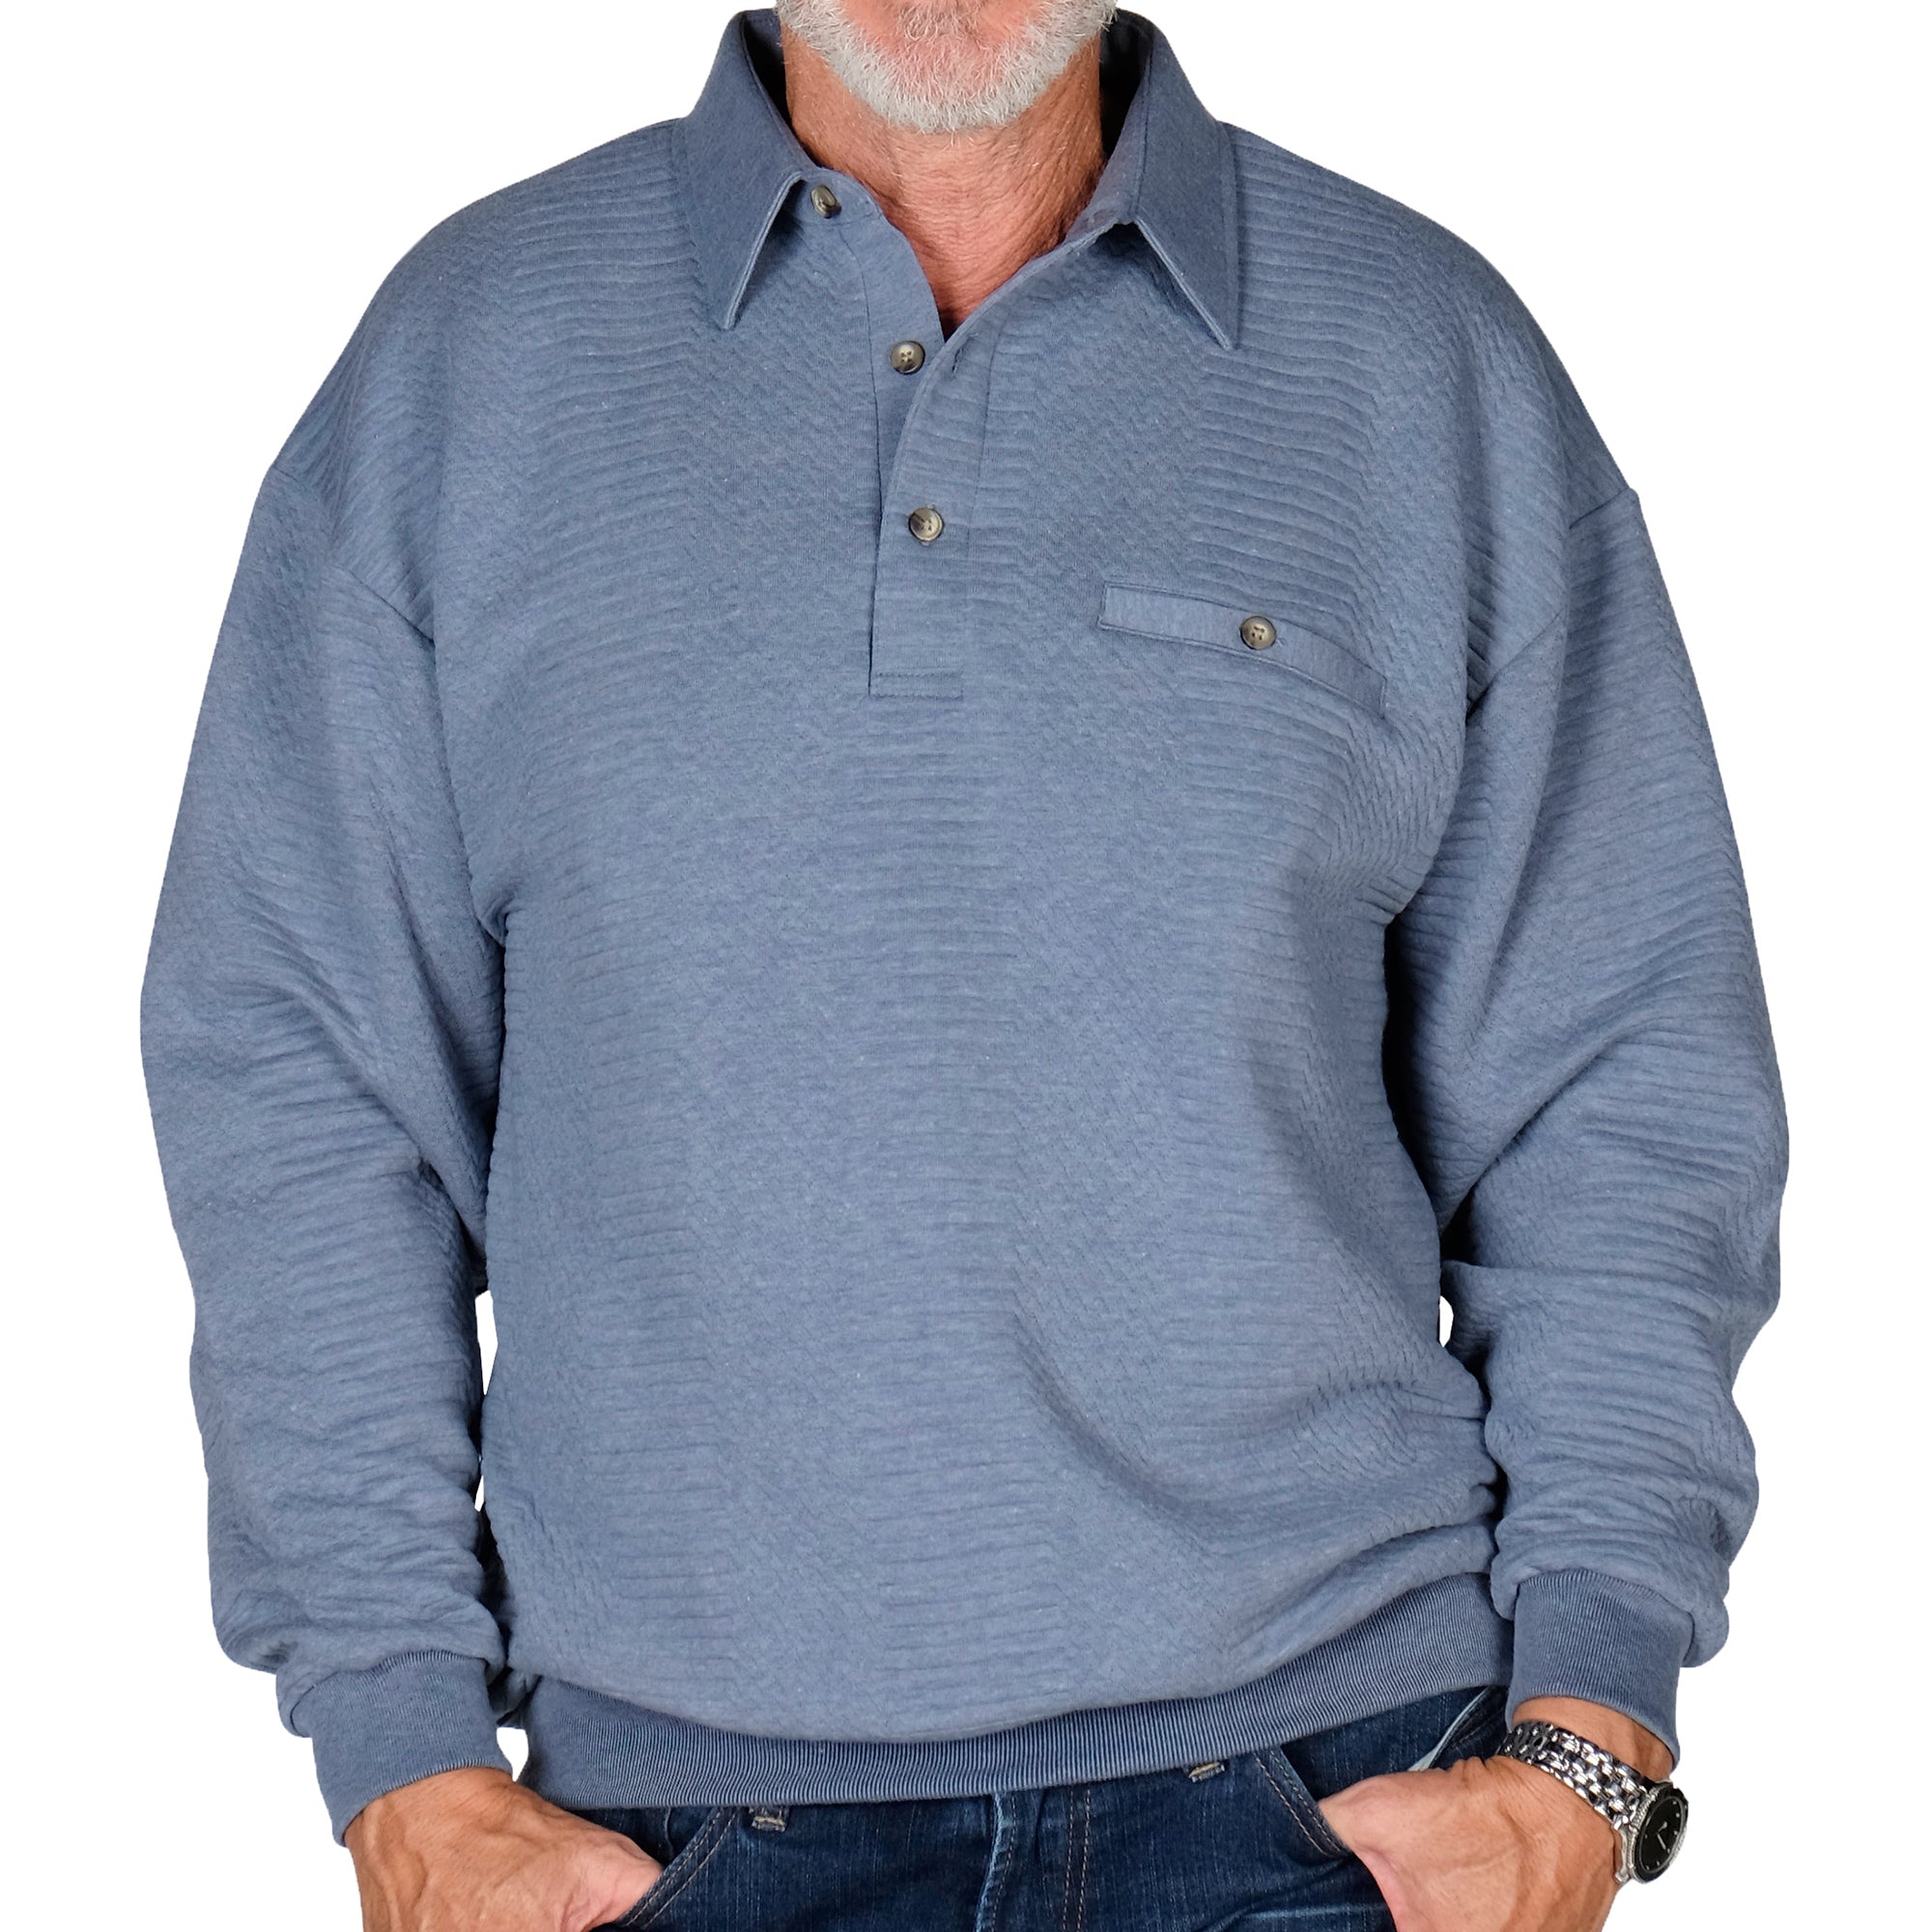 Banded Bottom  Classic Banded Bottom Shirts for Men since 1954 –  bandedbottom